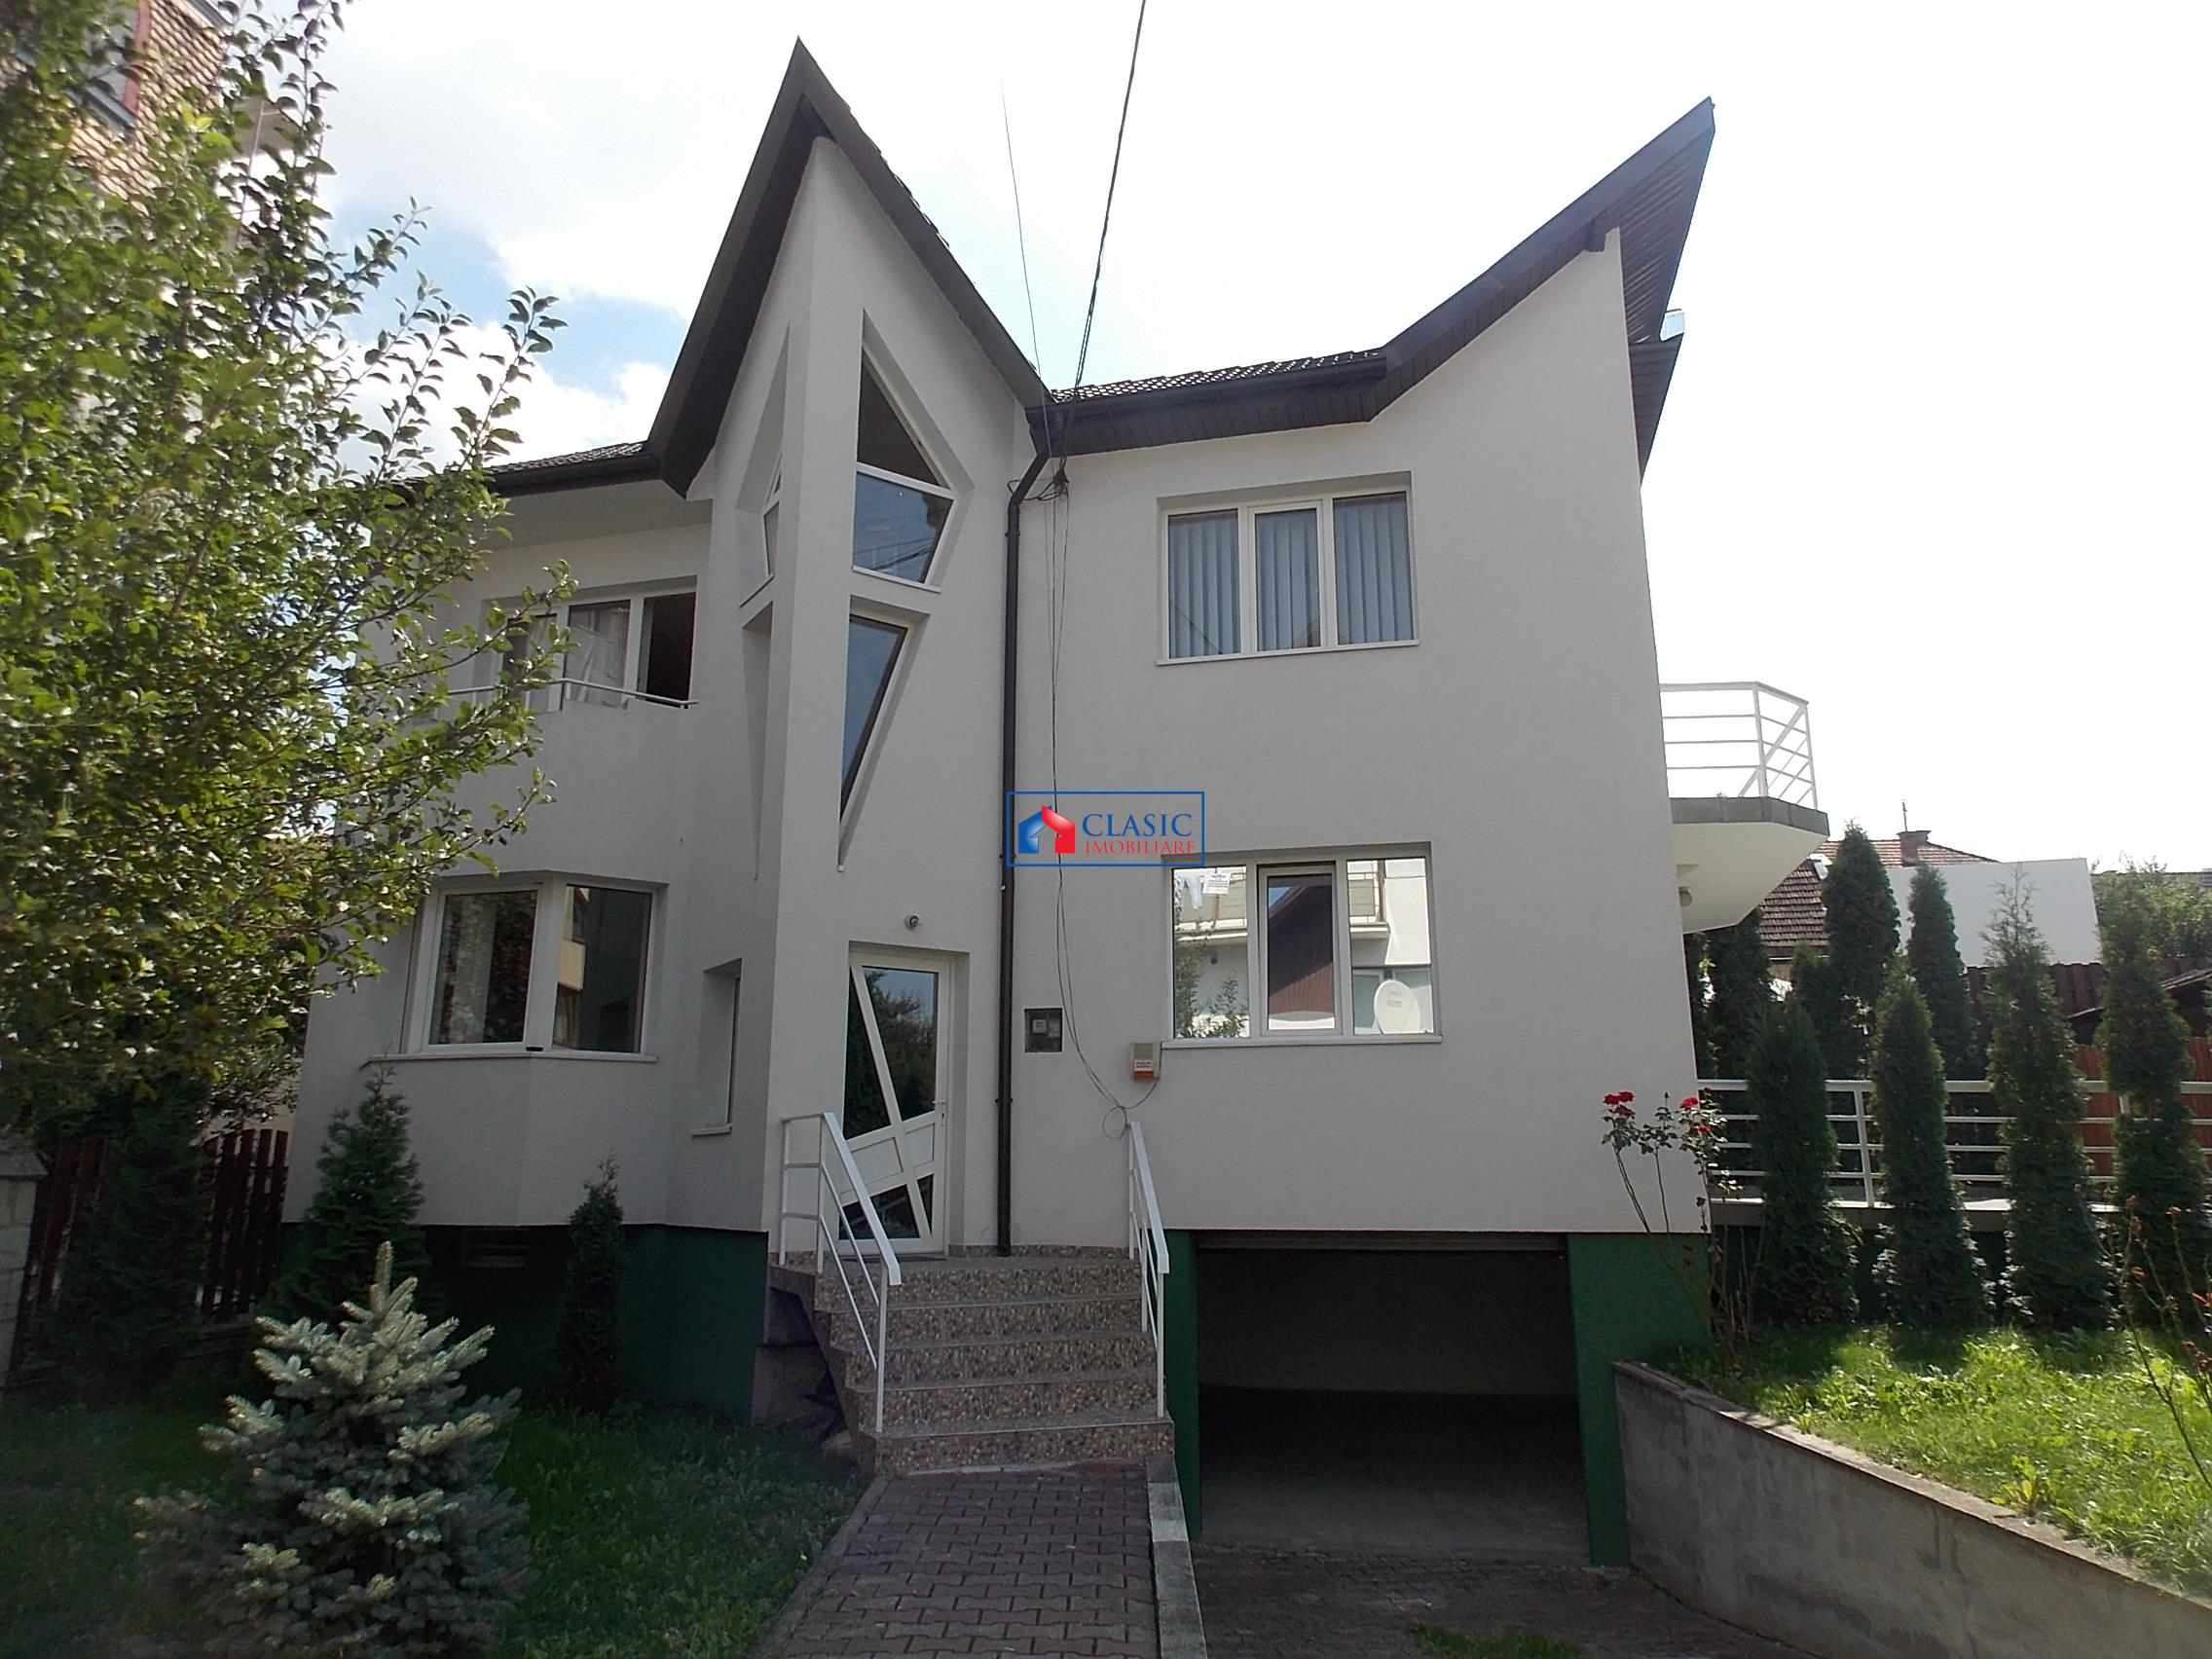 Inchiriere casa individuala pentru birouri zona A.Muresanu, Cluj-Napoca